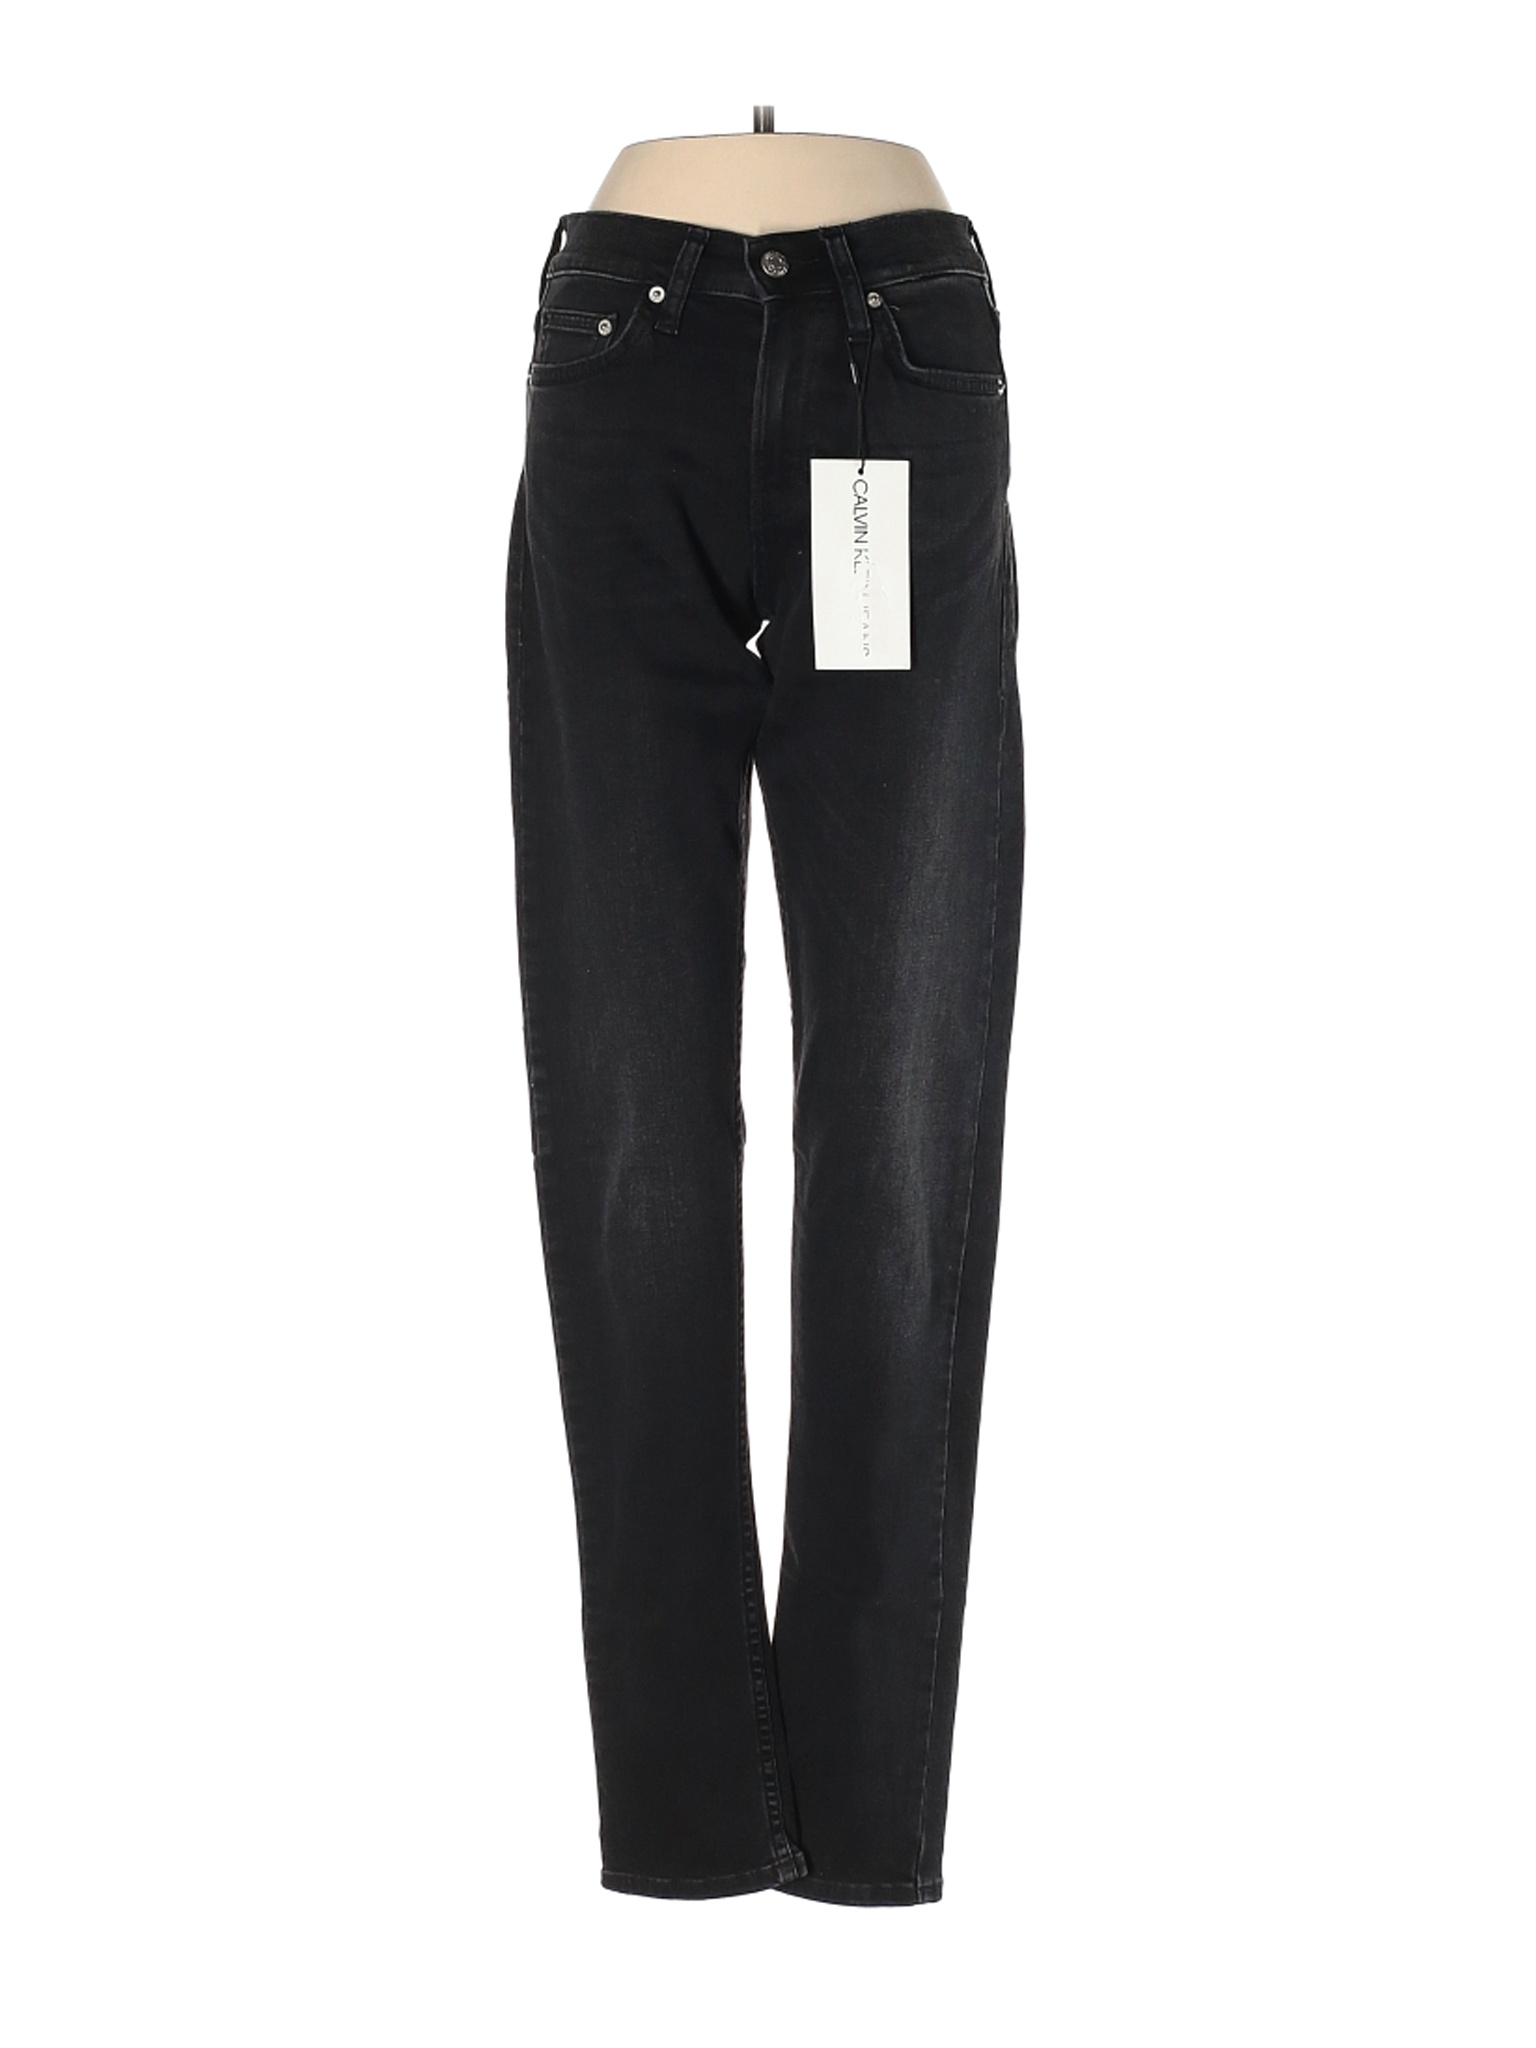 NWT CALVIN KLEIN JEANS Women Black Jeans 24W | eBay